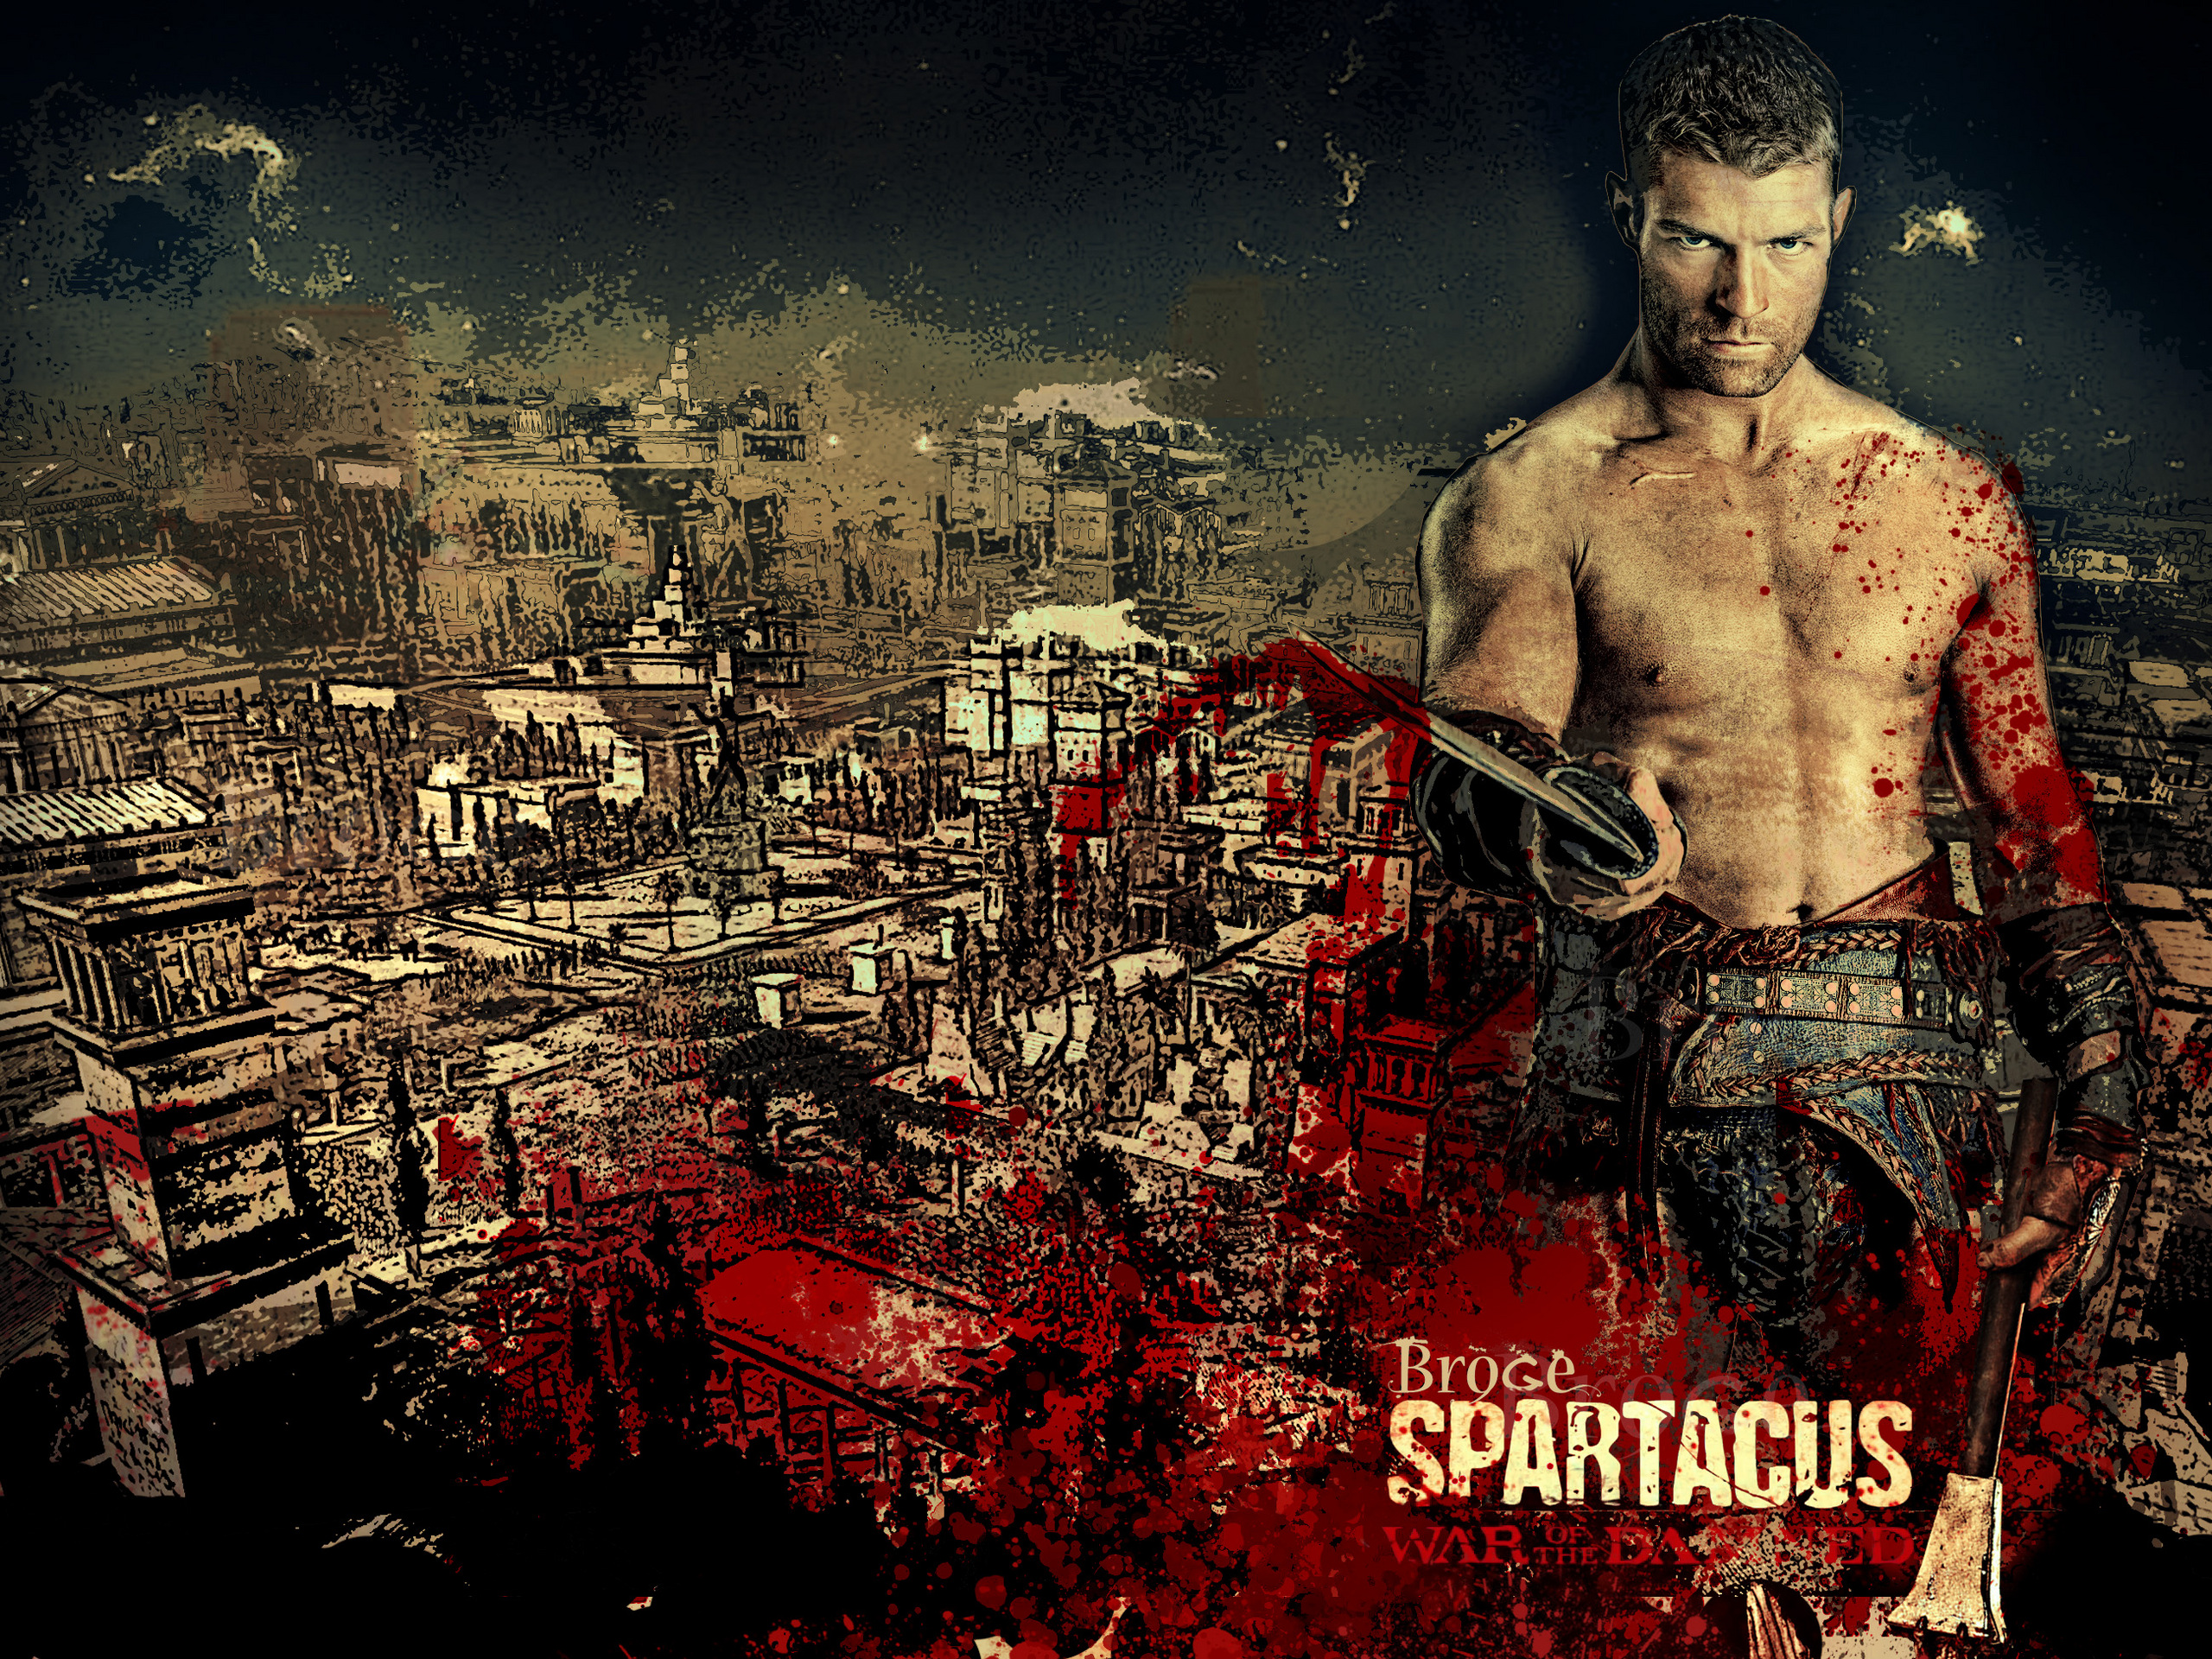 Spartacus Blood And Sand Wallpaper 1080p Image Femalecelebrity